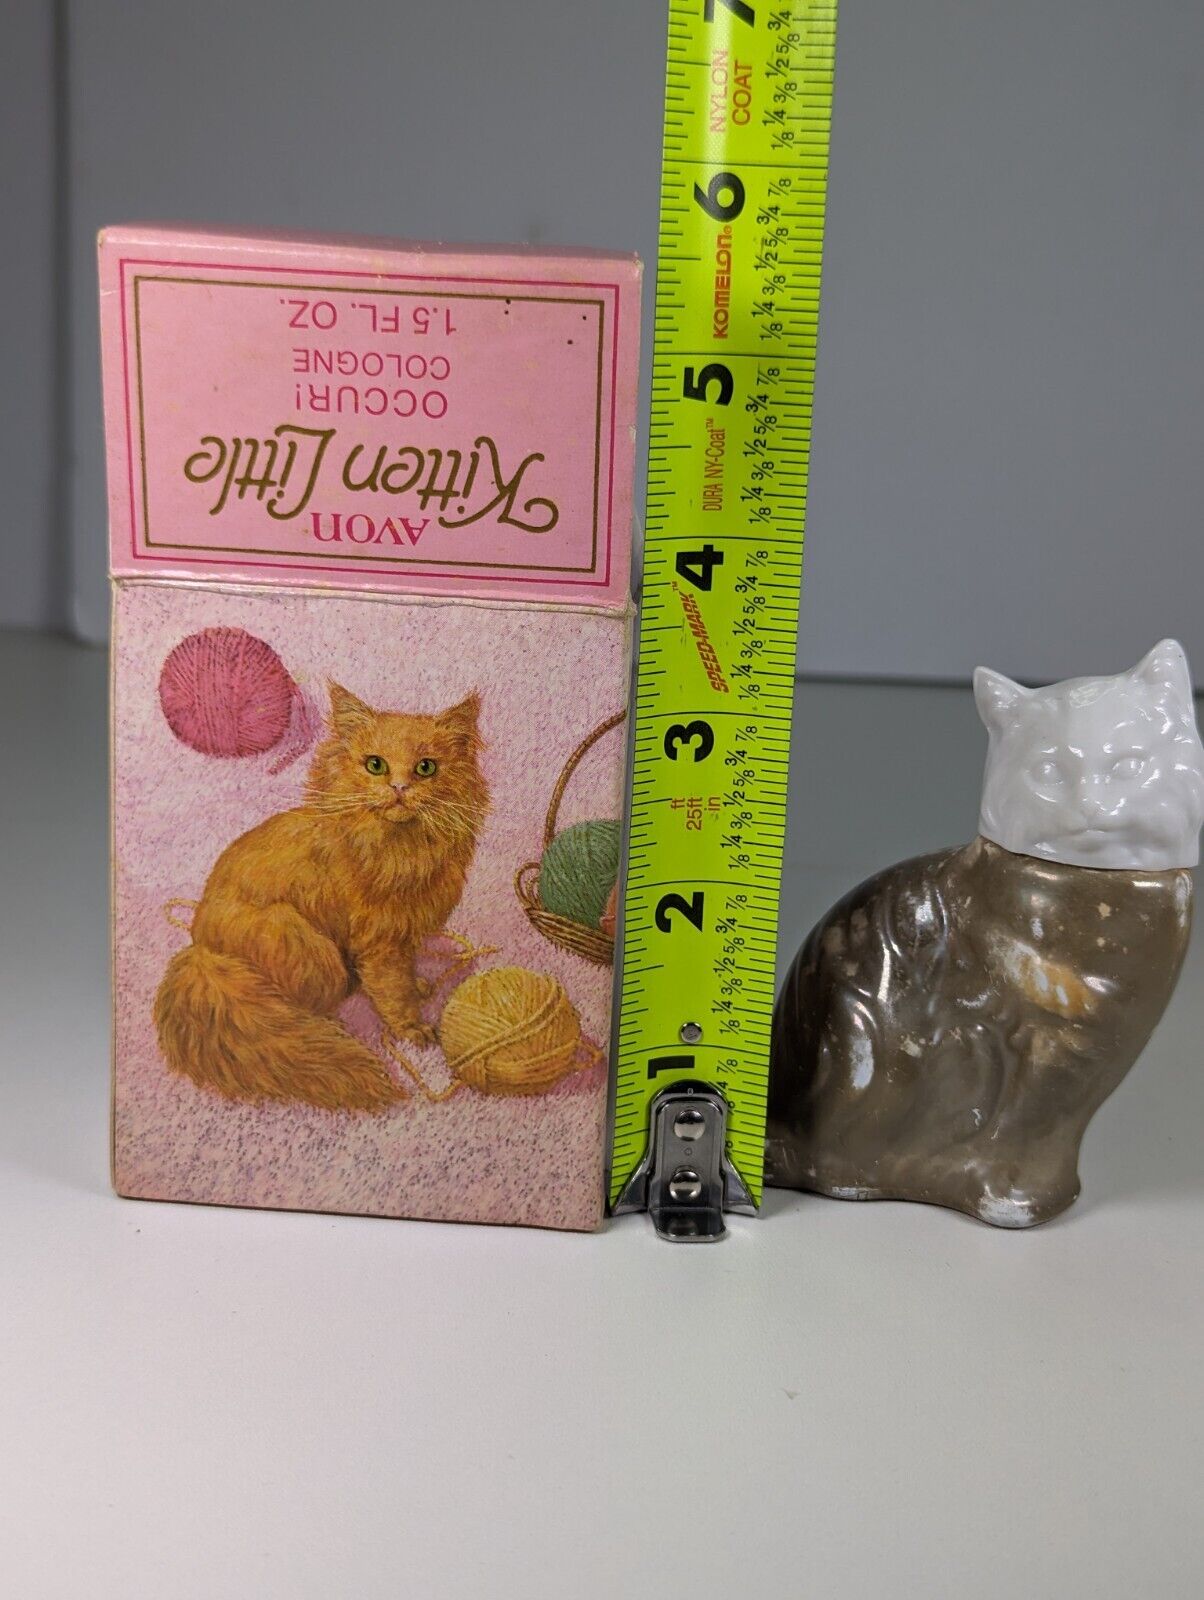 Vintage Avon “Kitten Little” Occur Cologne Empty Bottle With Box 1970’s